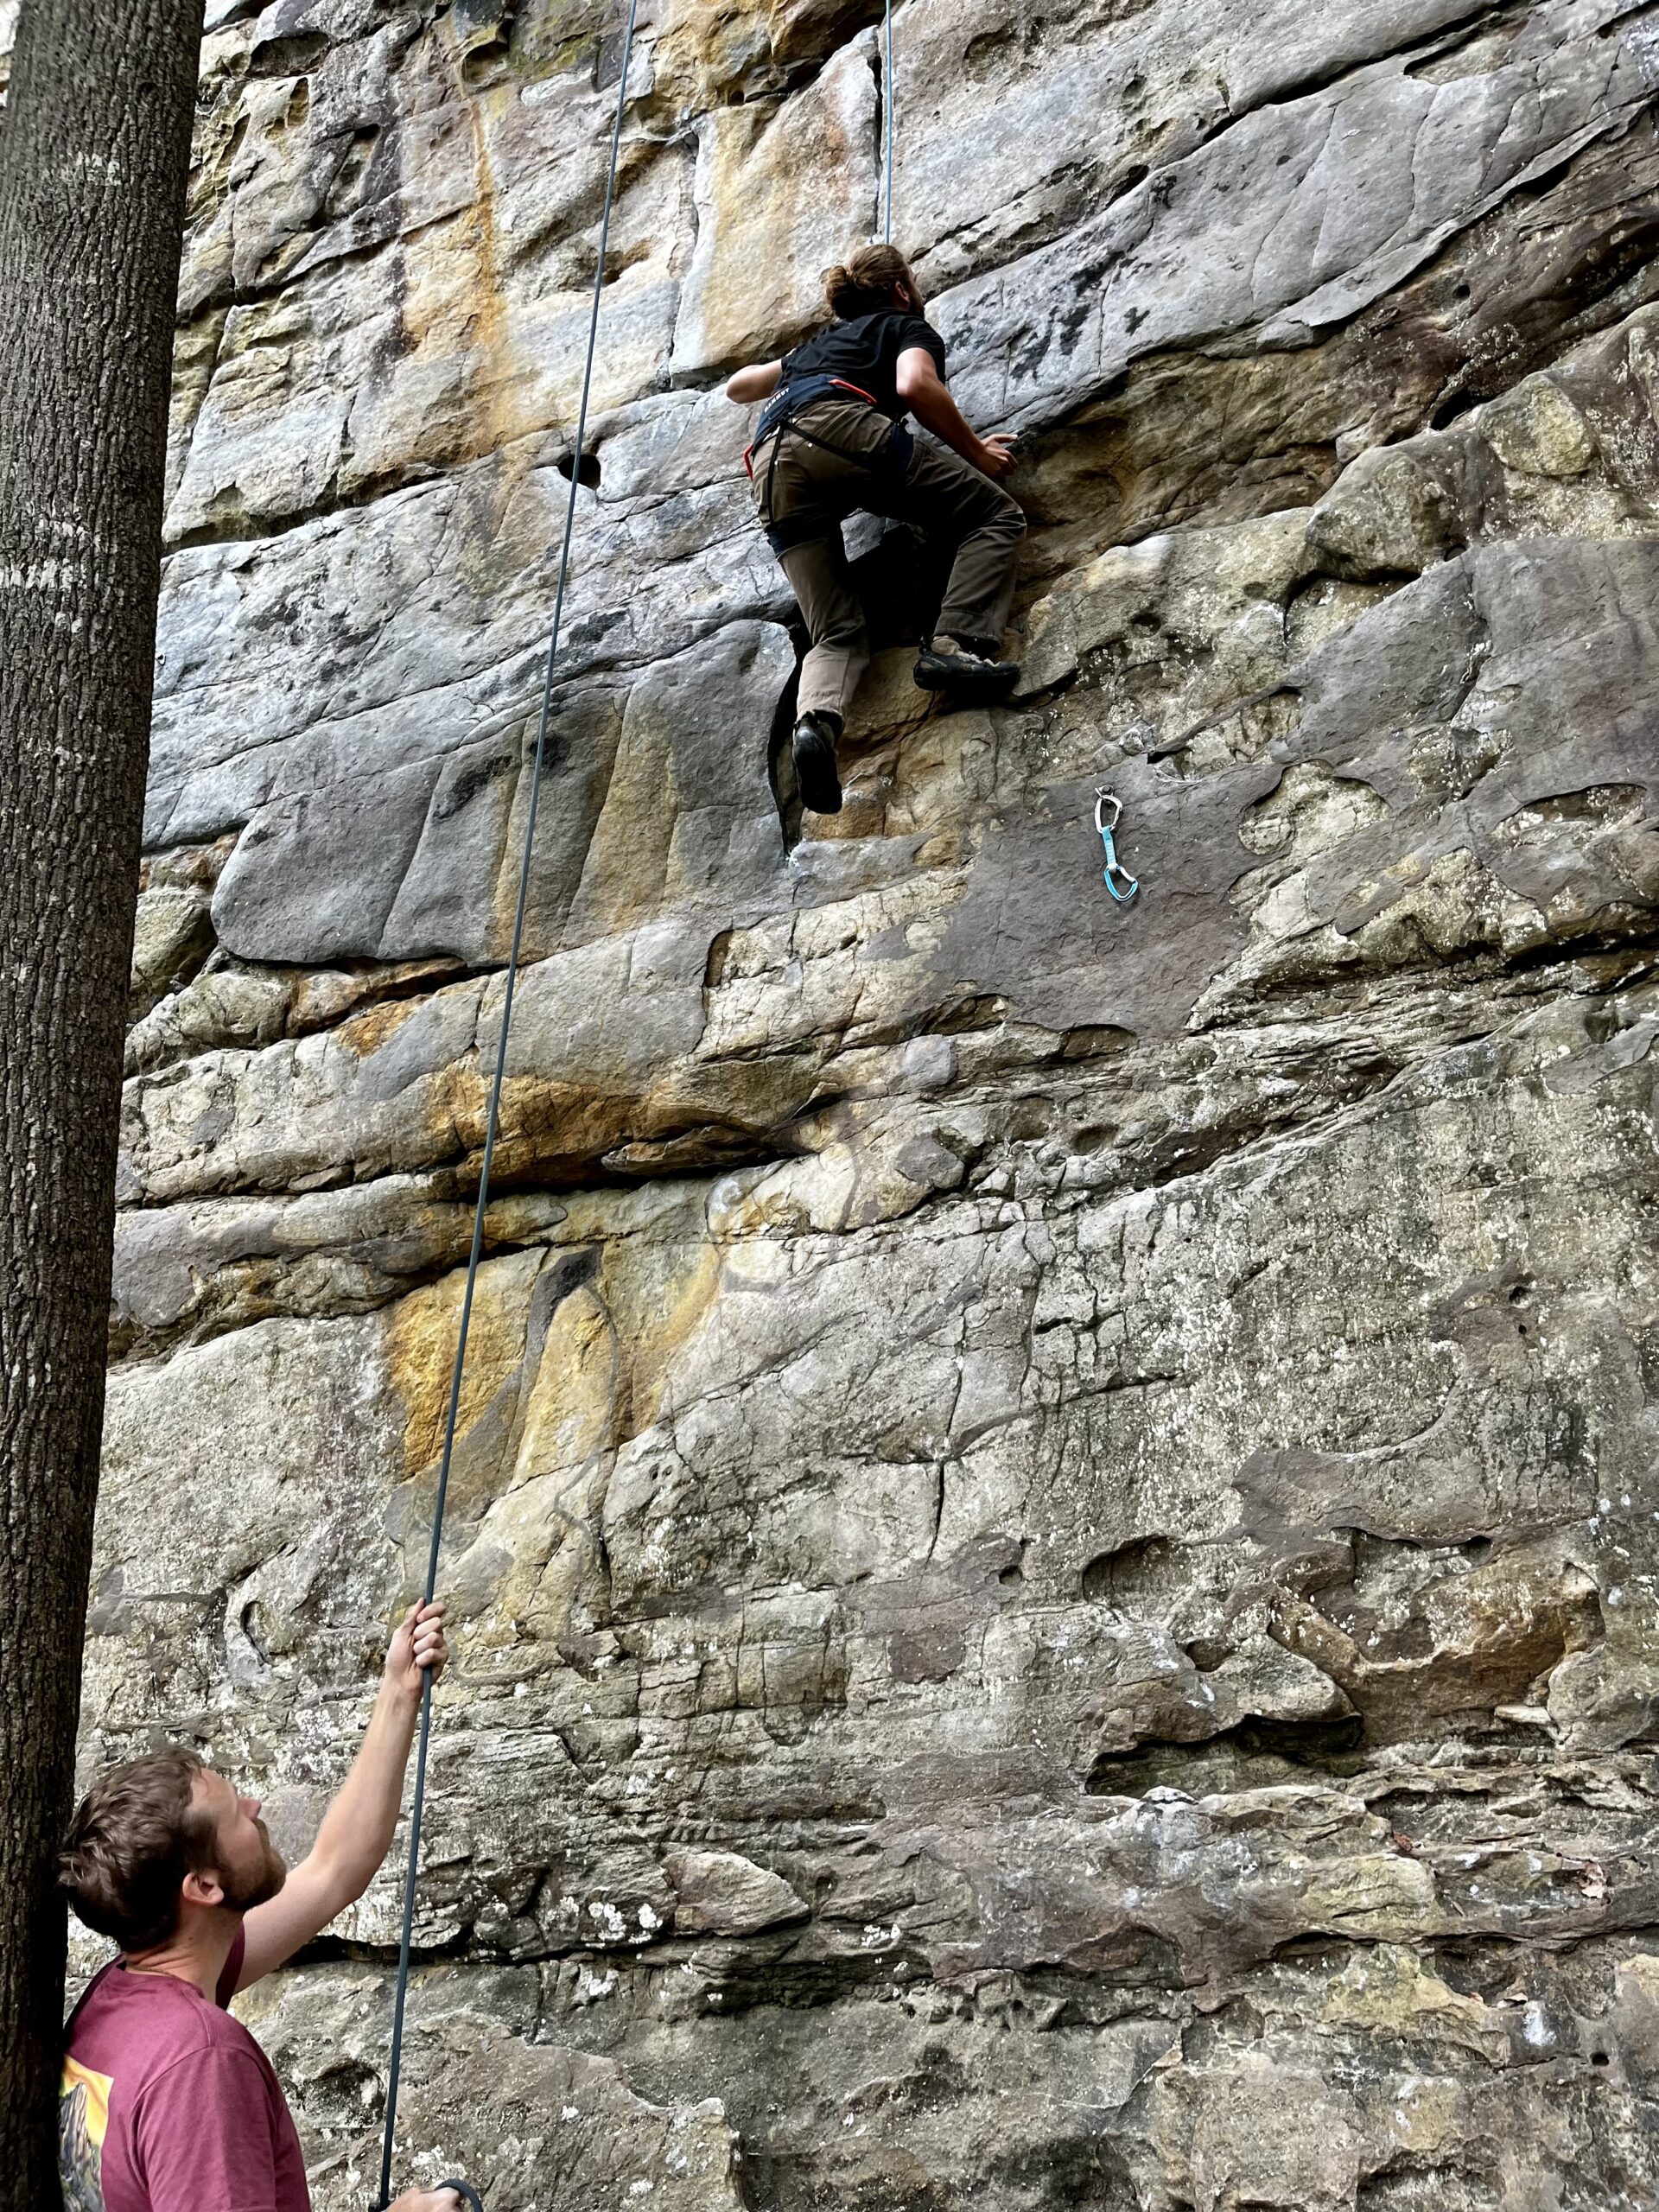 Luke Rock-climbing